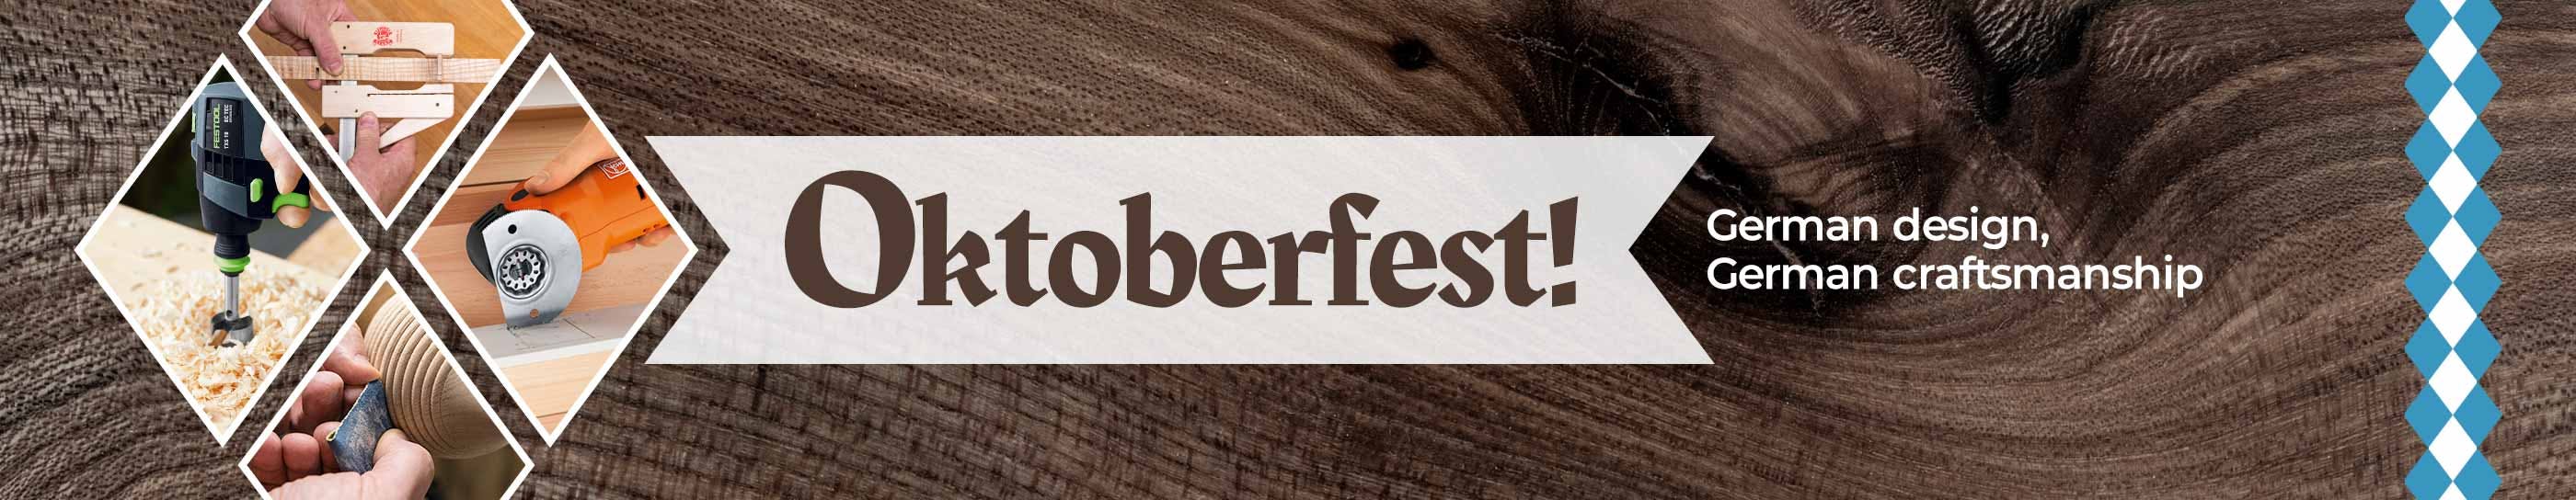 Oktoberfest! German design, German craftsmanship